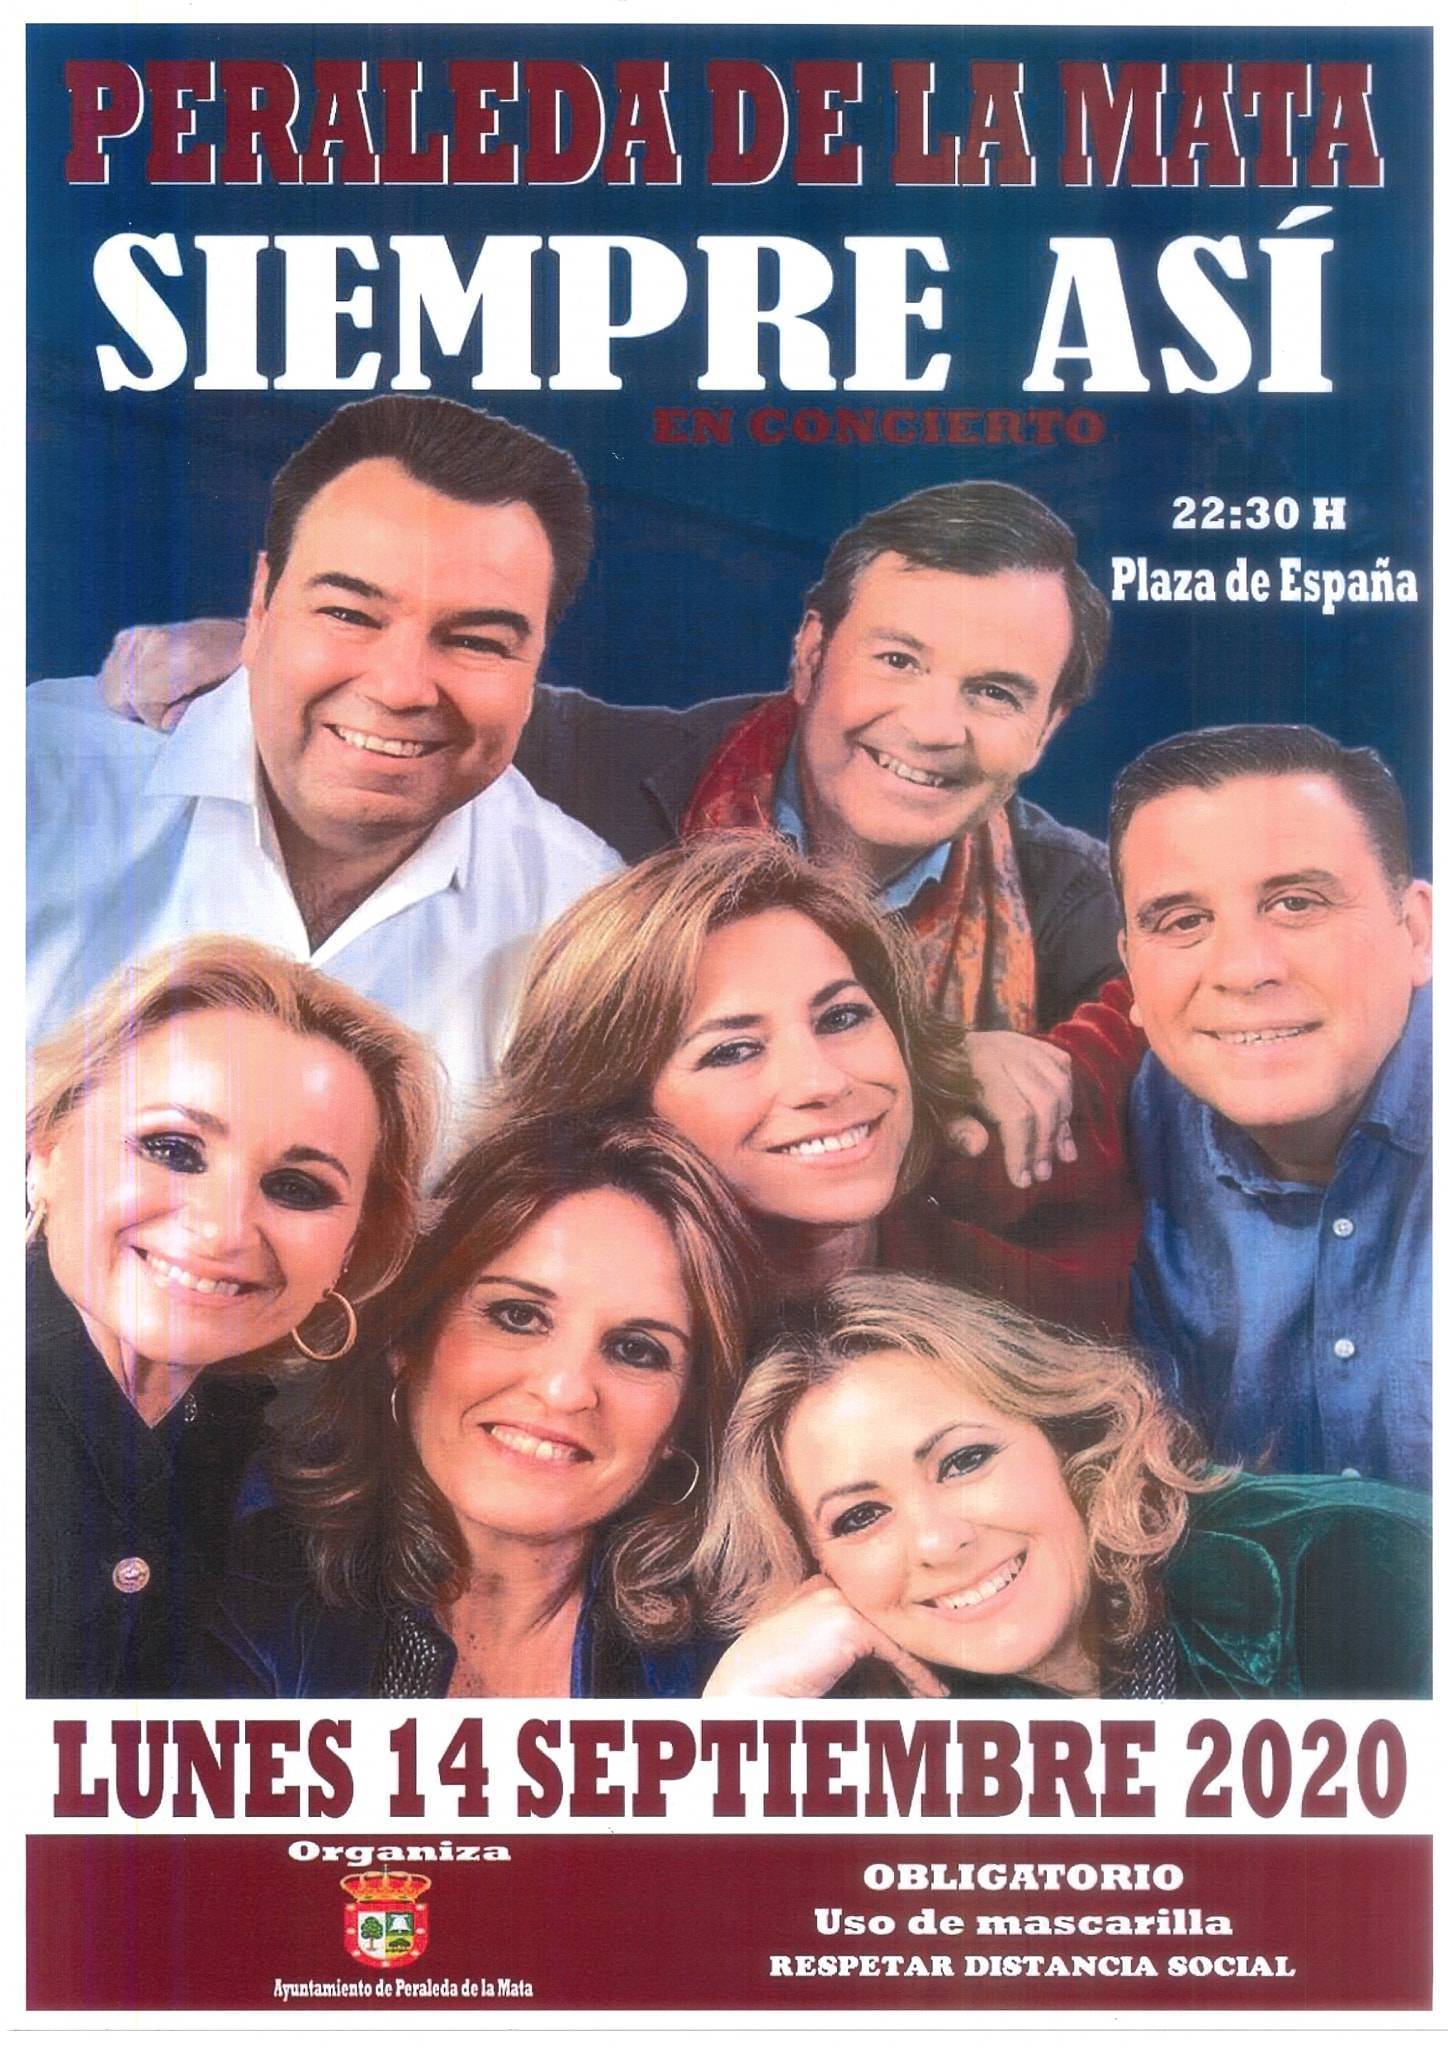 Siempre Así (2020) - Peraleda de la Mata (Cáceres)